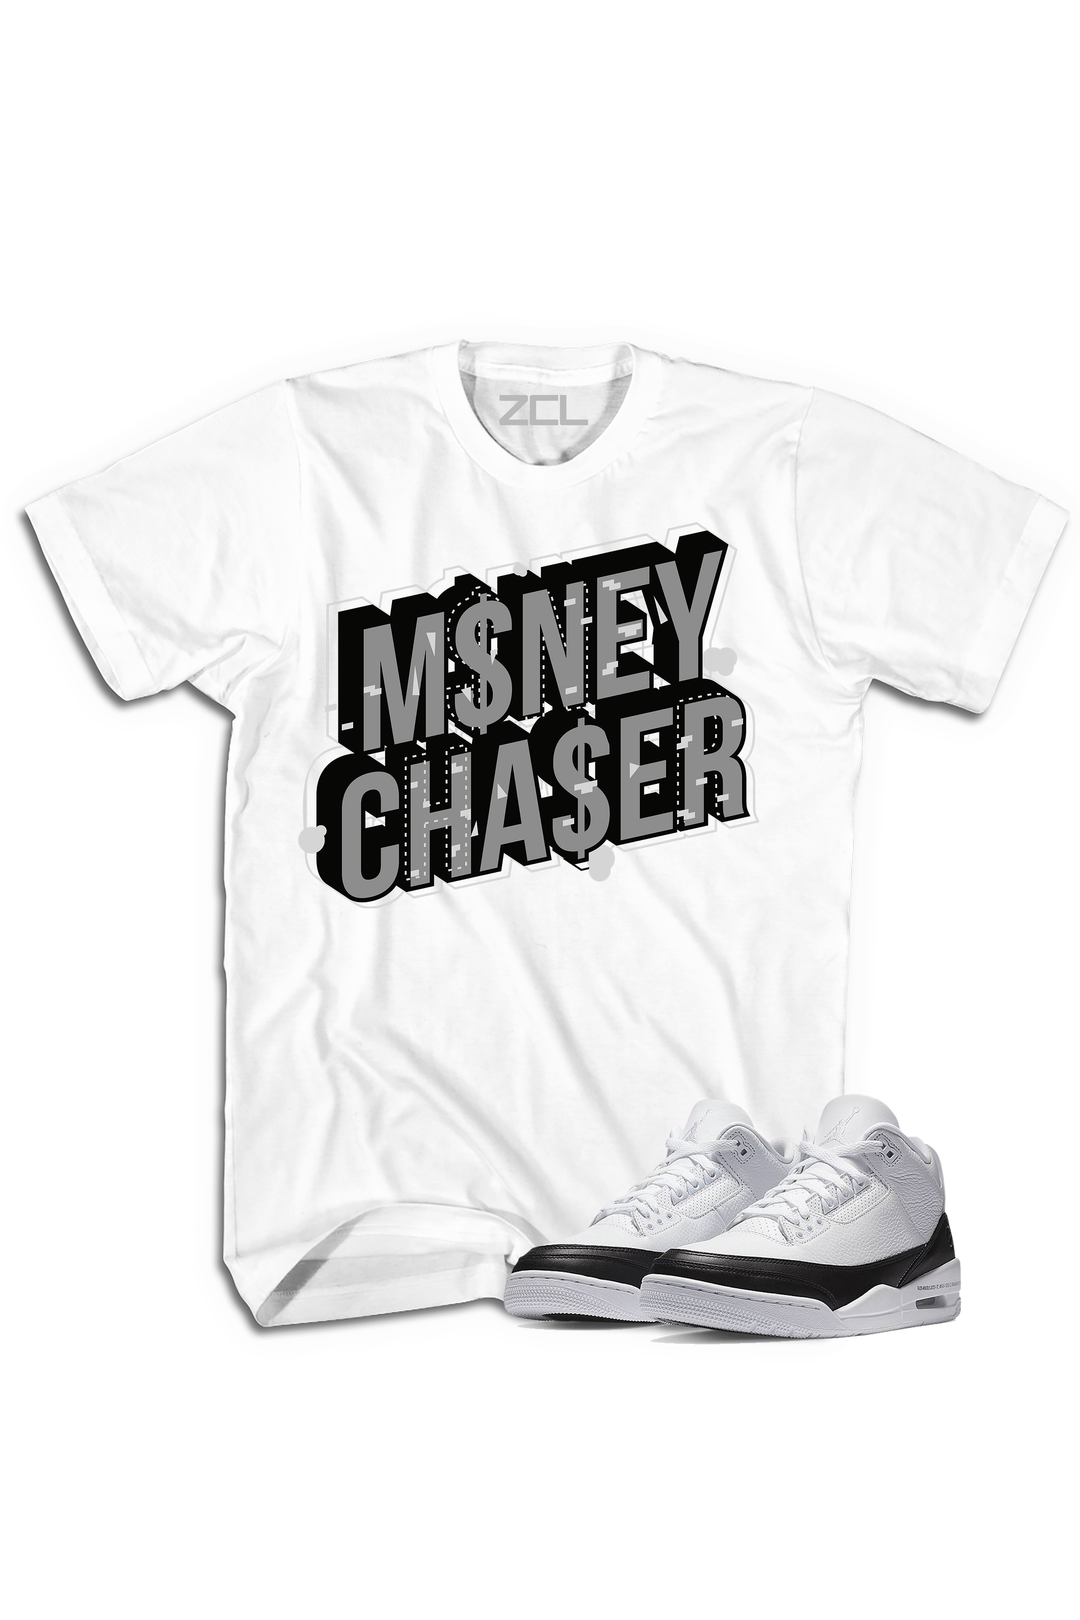 Air Jordan 3 "Money Chaser" Tee Fragment - Zamage